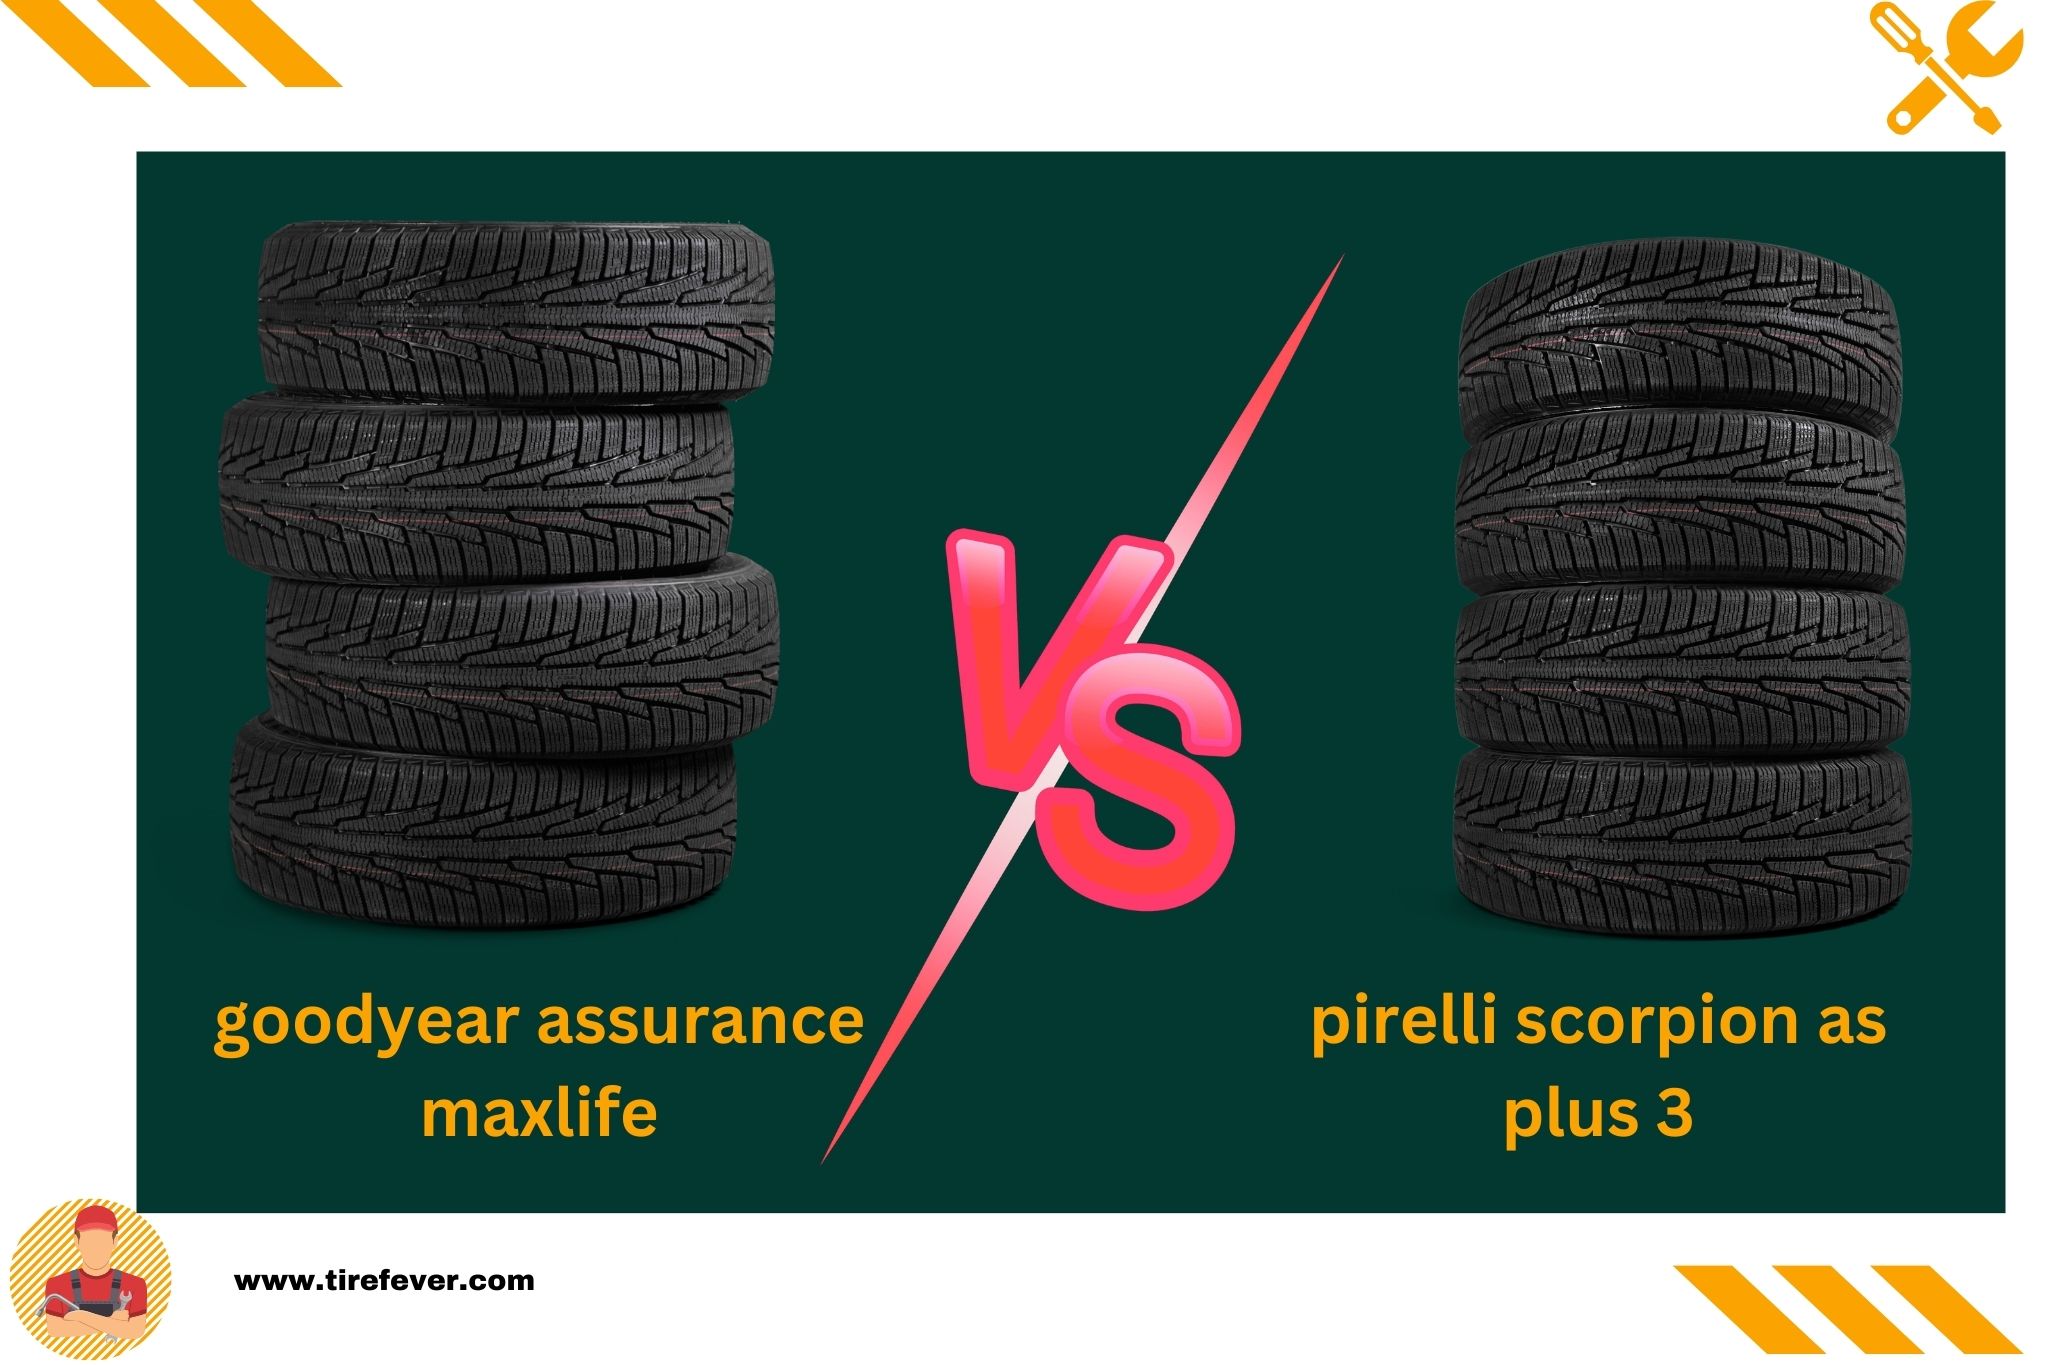 goodyear assurance maxlife vs pirelli scorpion as plus 3